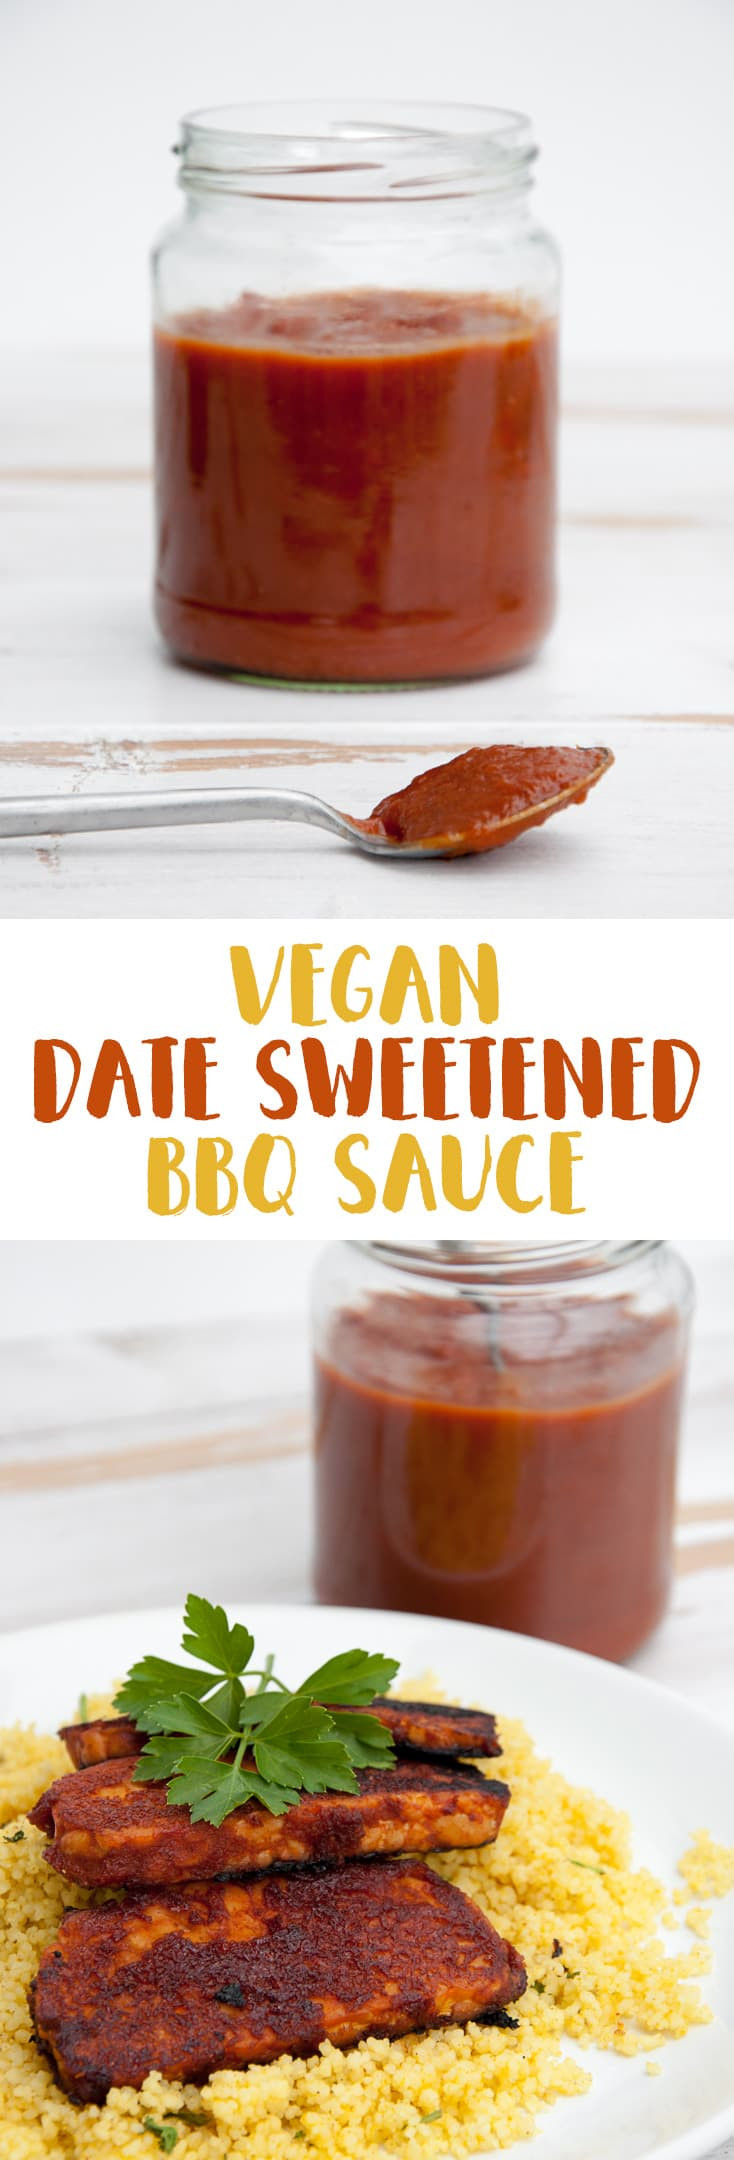 Vegetarian Bbq Sauce Recipe
 Vegan Date Sweetened BBQ Sauce Recipe